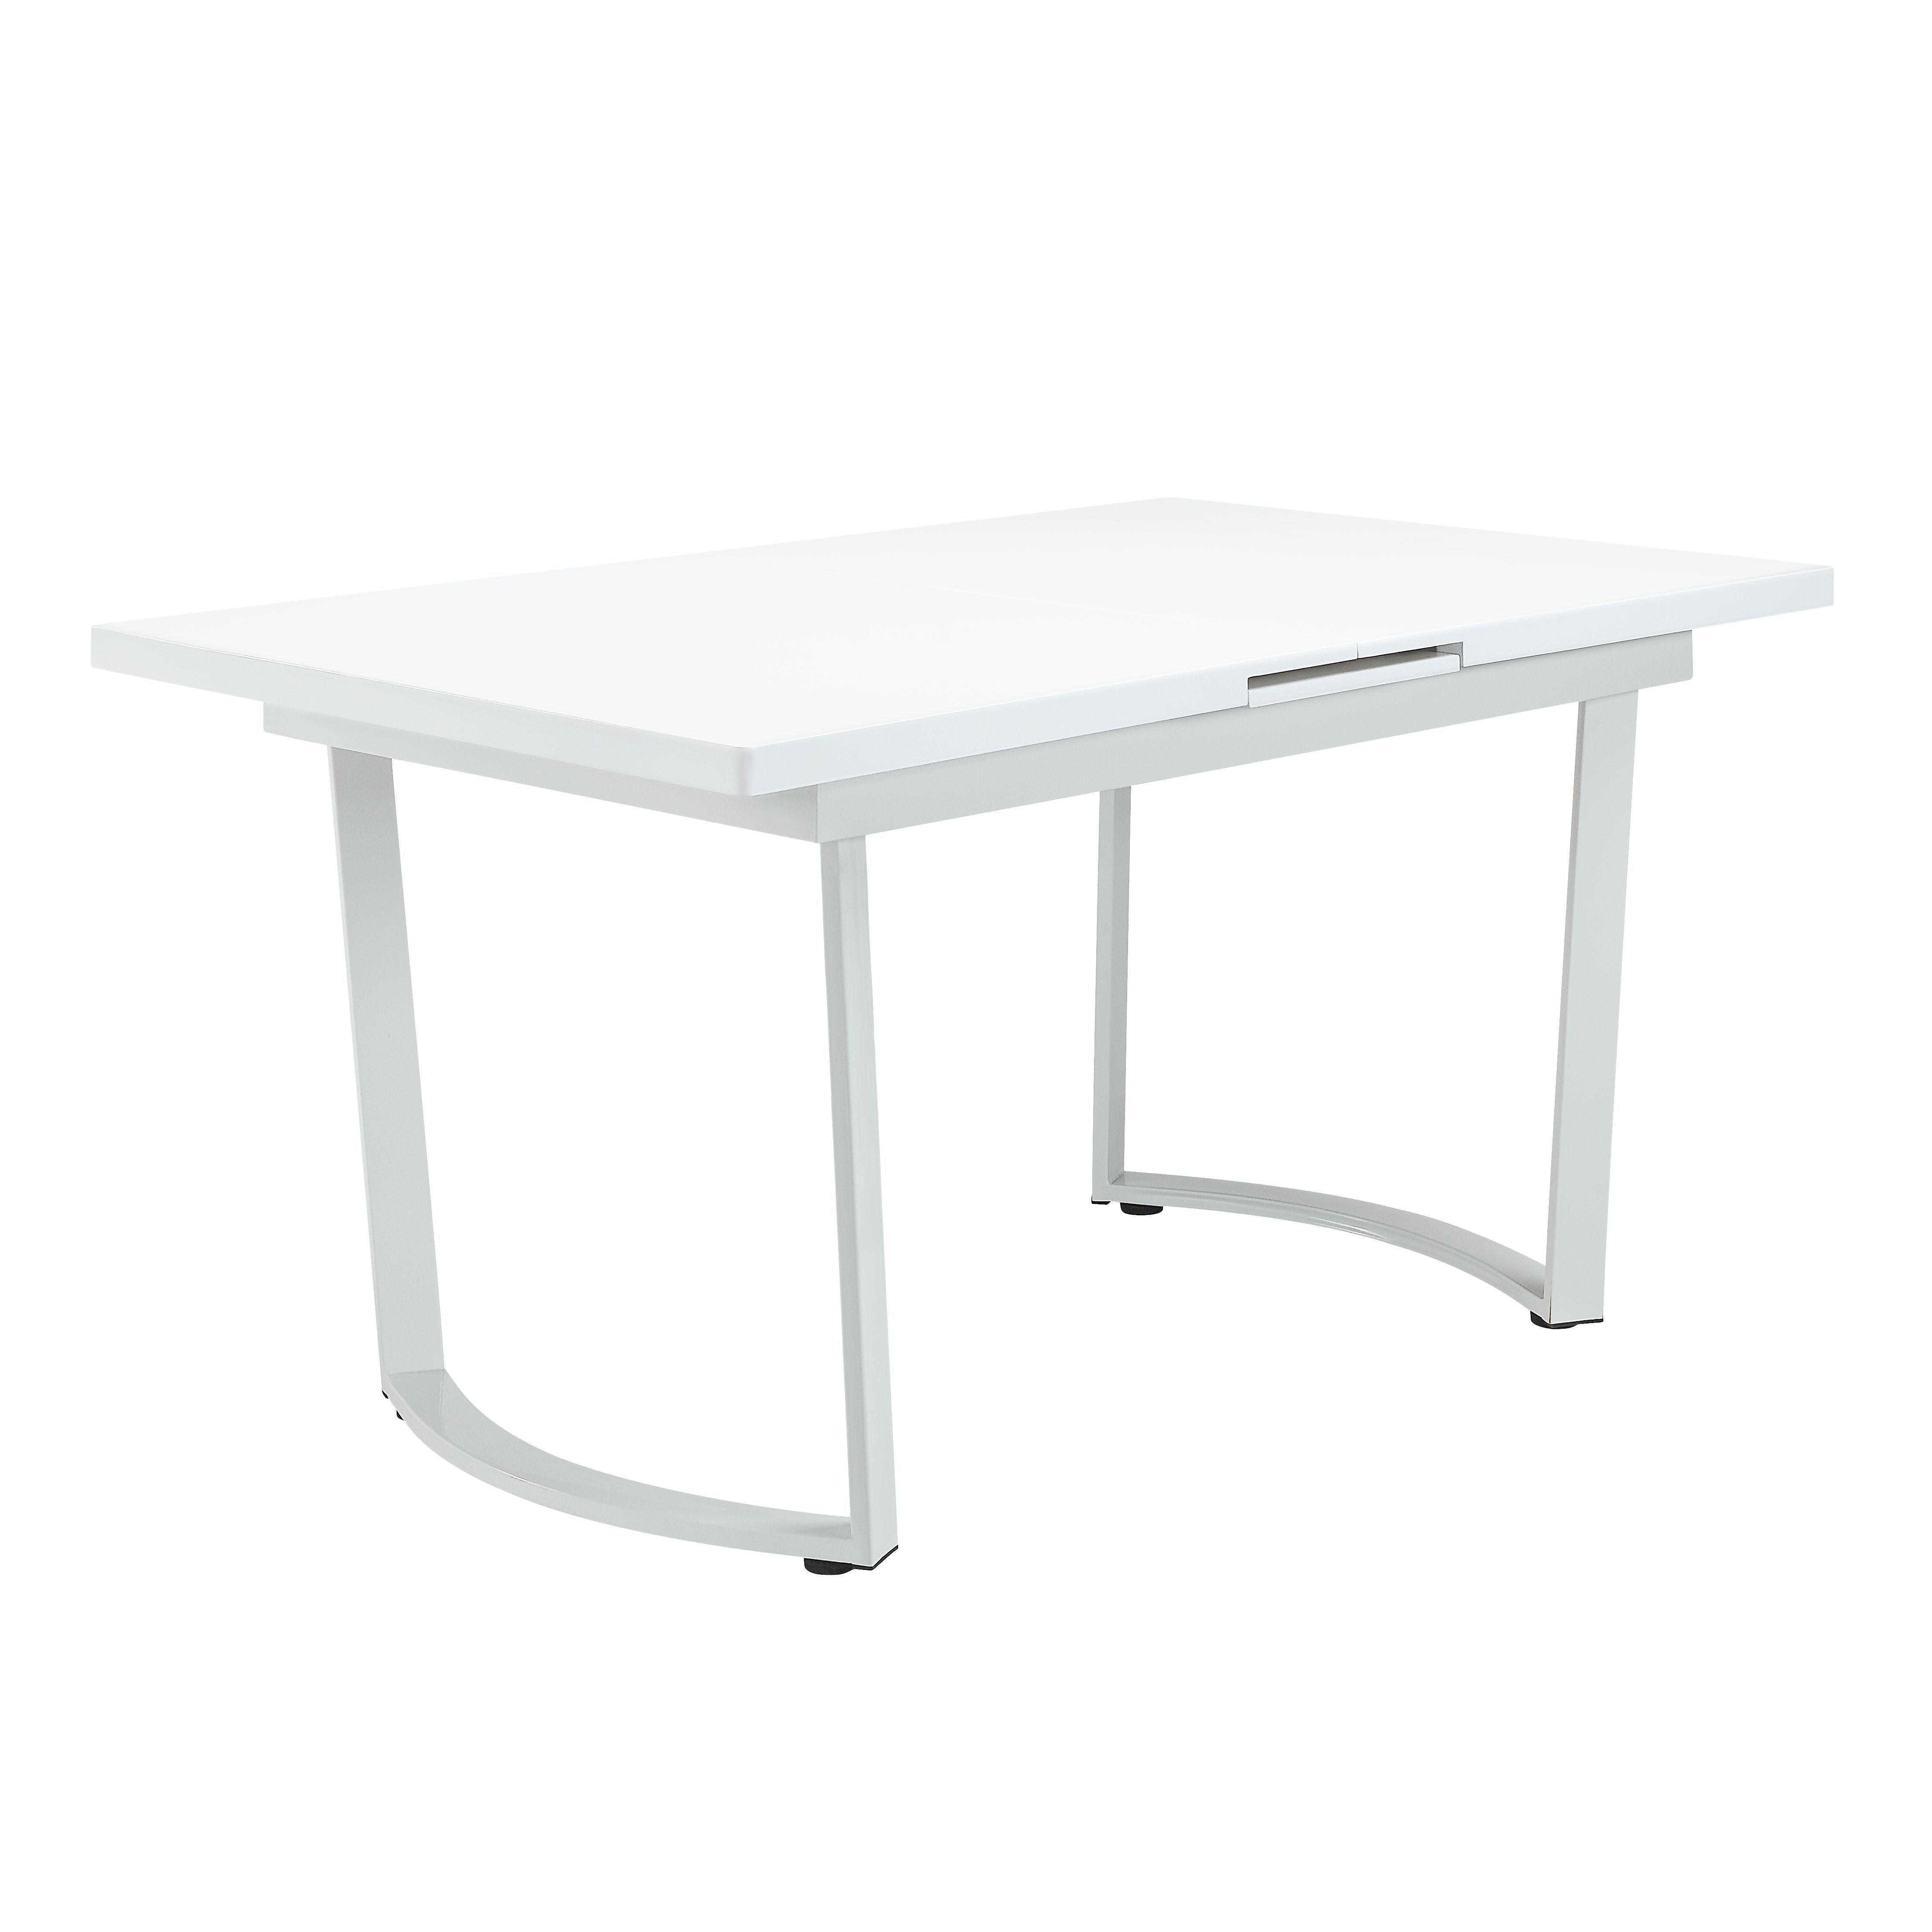 ACME - Palton - Dining Table - High Gloss White Finish - 5th Avenue Furniture